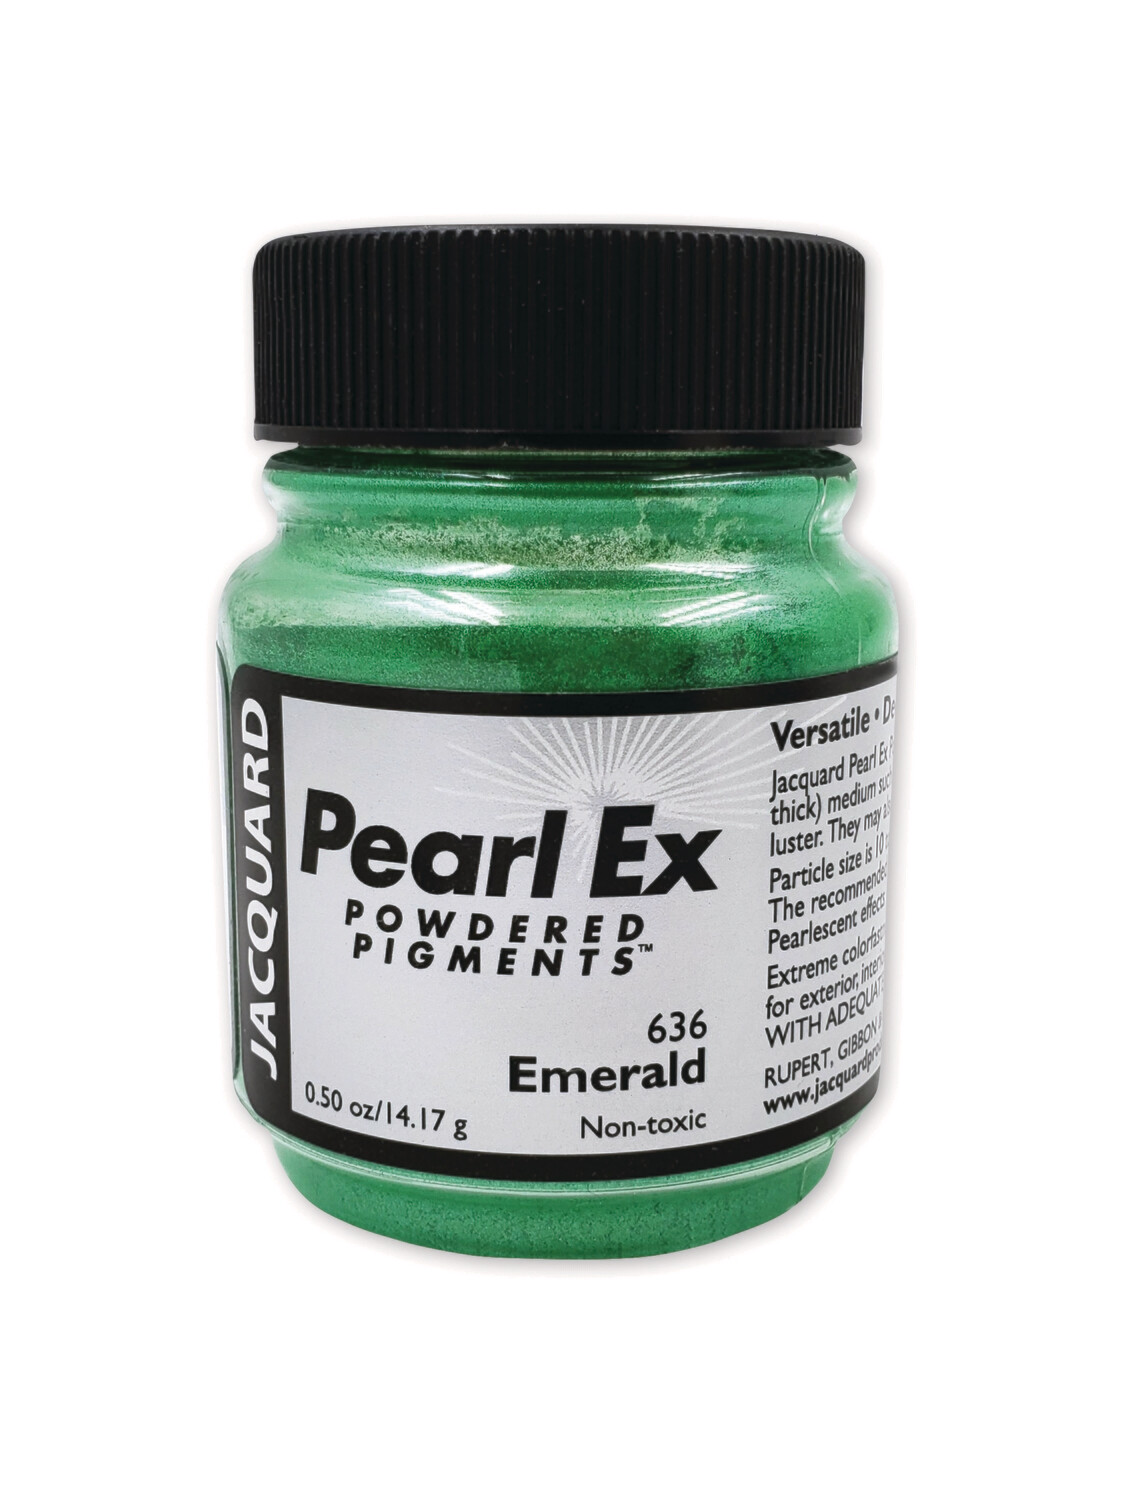 Pearl Ex Powdered Pigments- Emerald